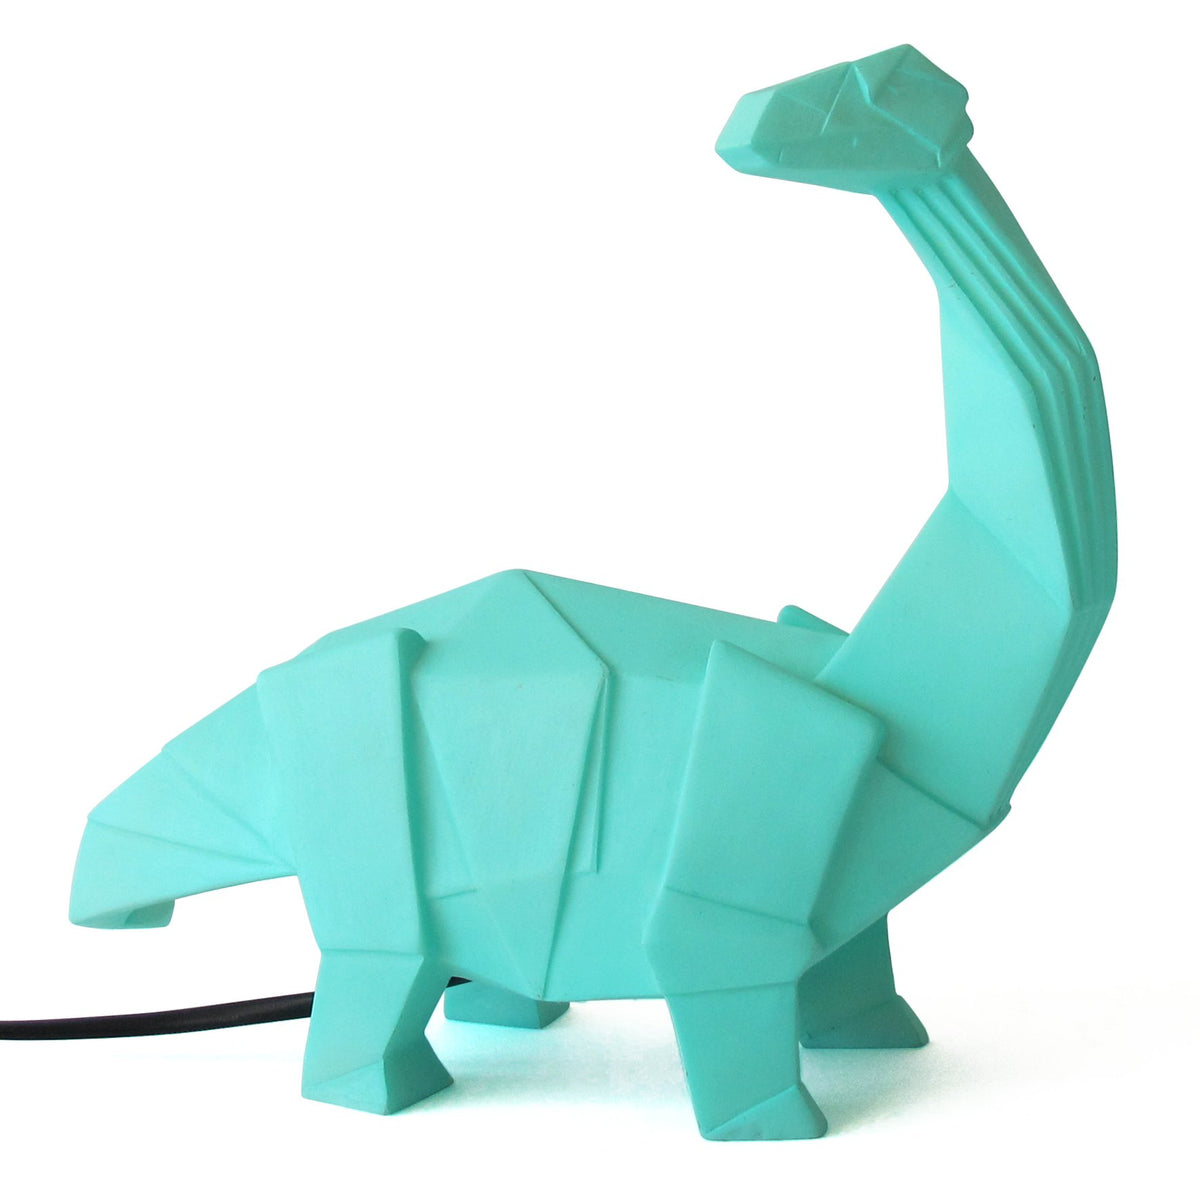 Origami Brachiosaurus Dinosaur Table Lamp